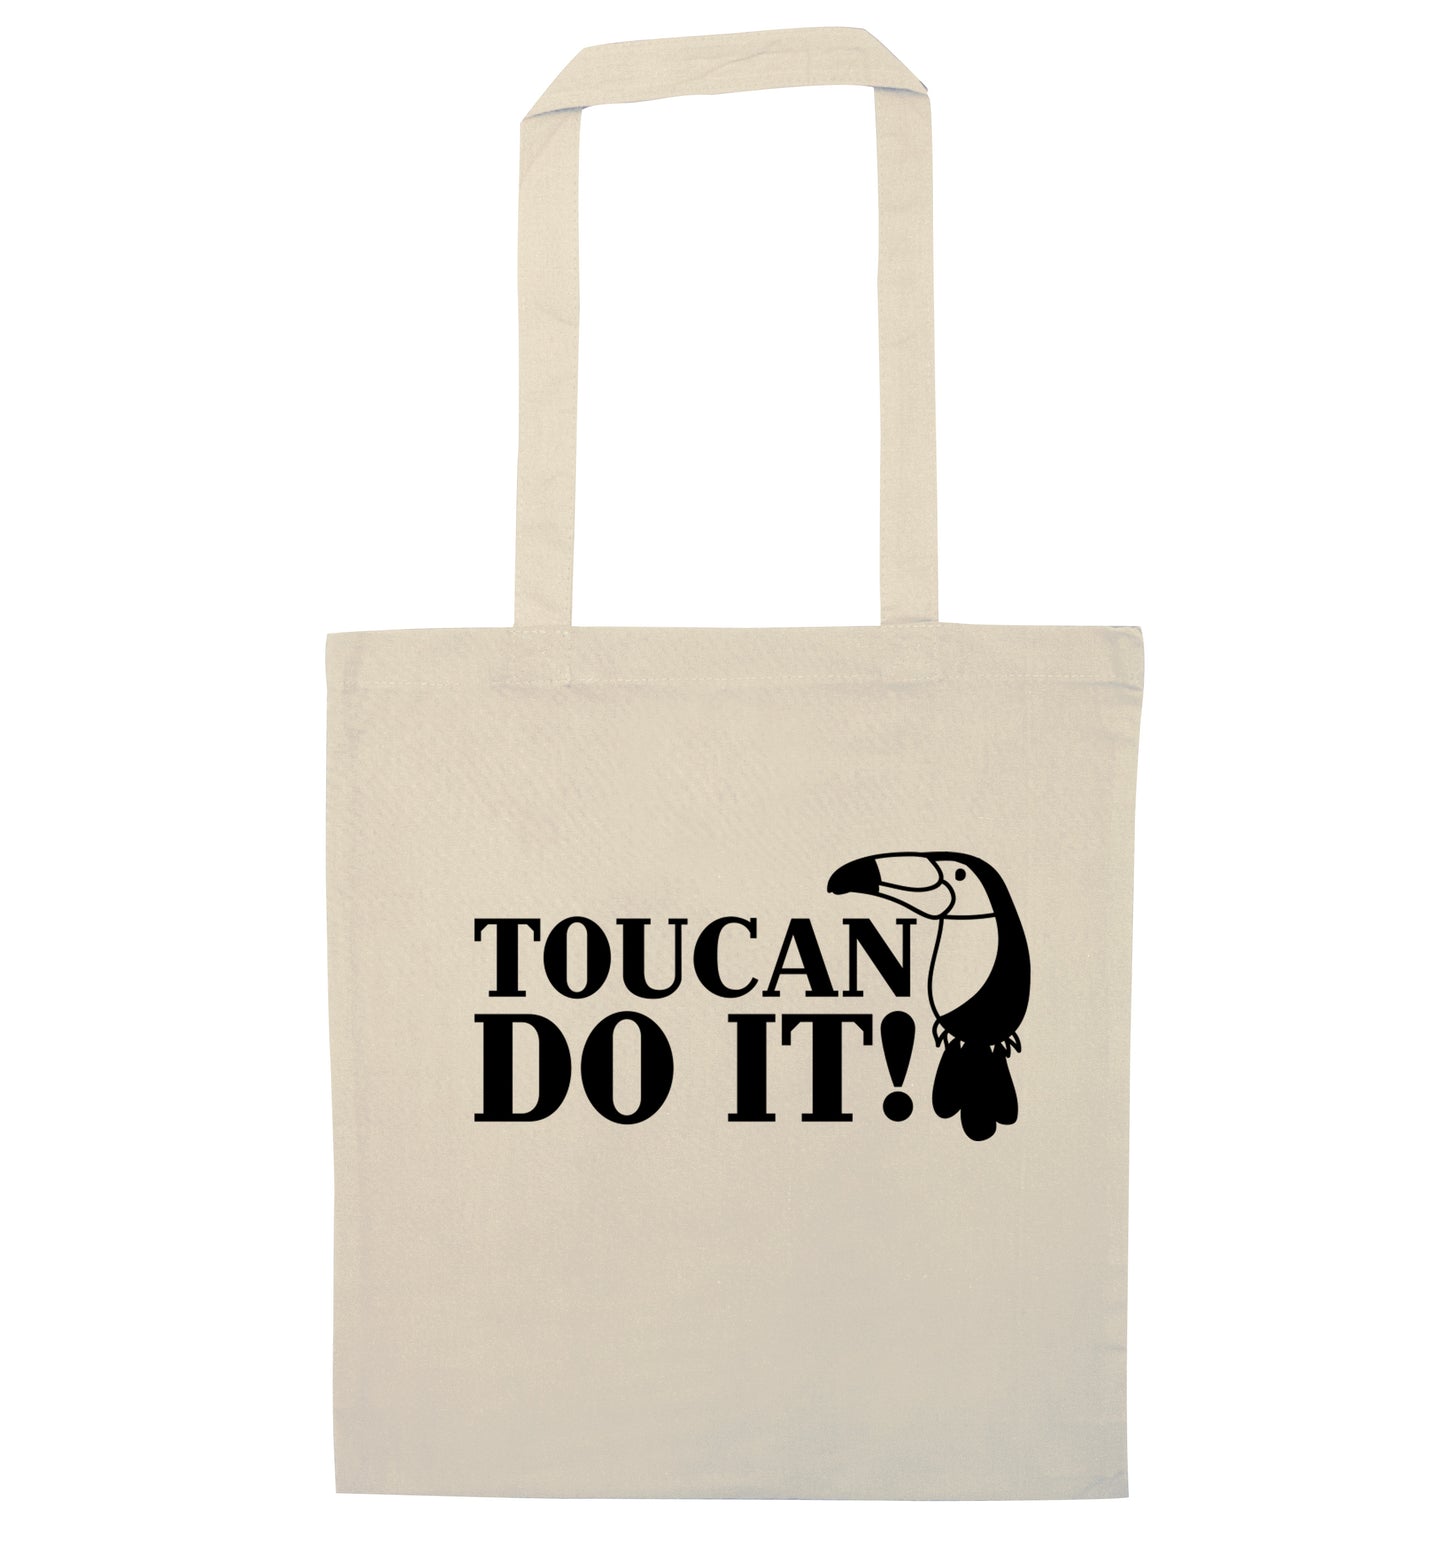 Toucan do it! natural tote bag